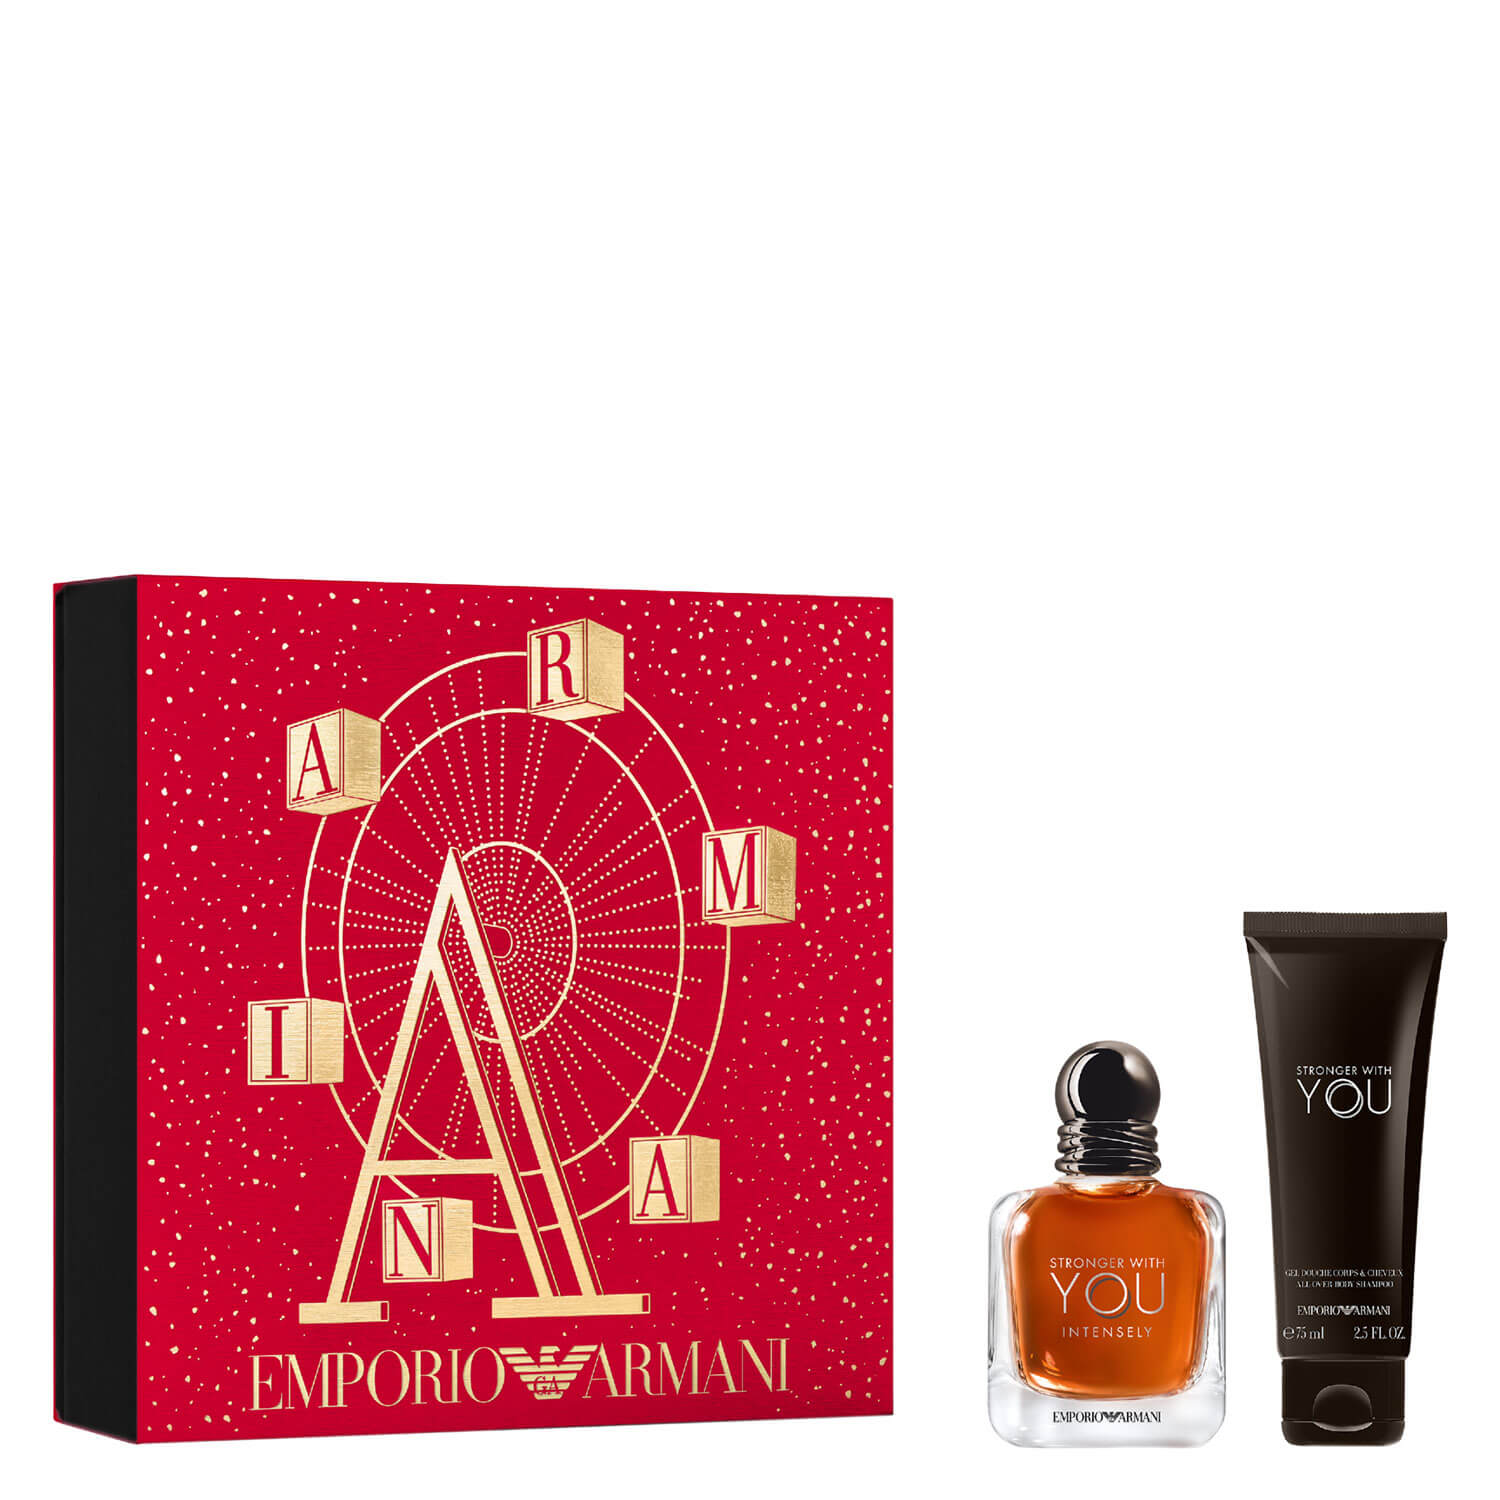 Giorgio Armani Emporio Armani - Stronger With You Intense Eau de Parfum Set  